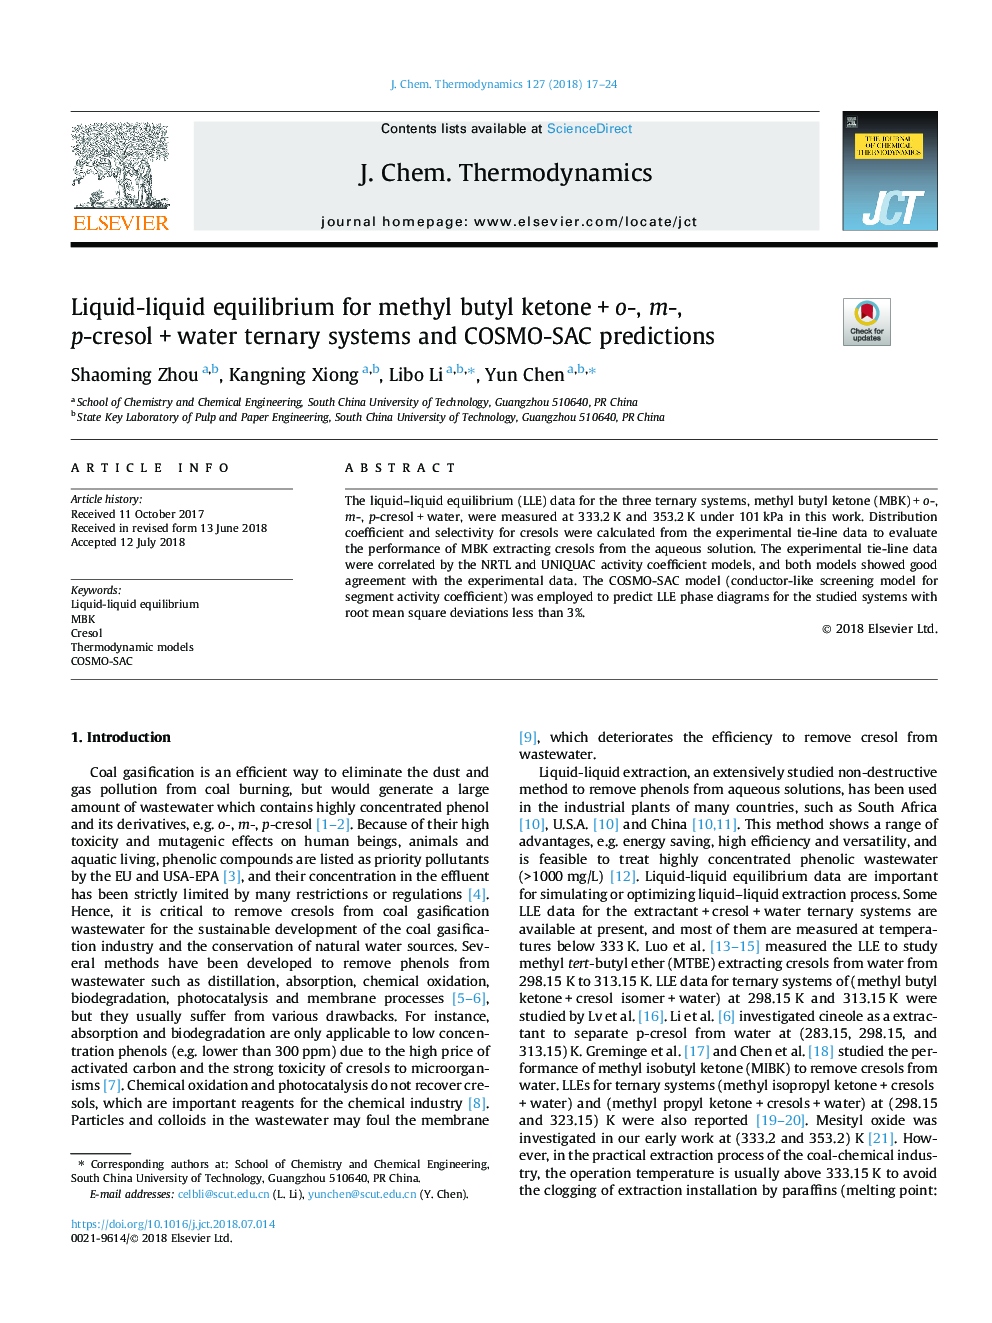 Liquid-liquid equilibrium for methyl butyl ketoneâ¯+â¯o-, m-, p-cresolâ¯+â¯water ternary systems and COSMO-SAC predictions